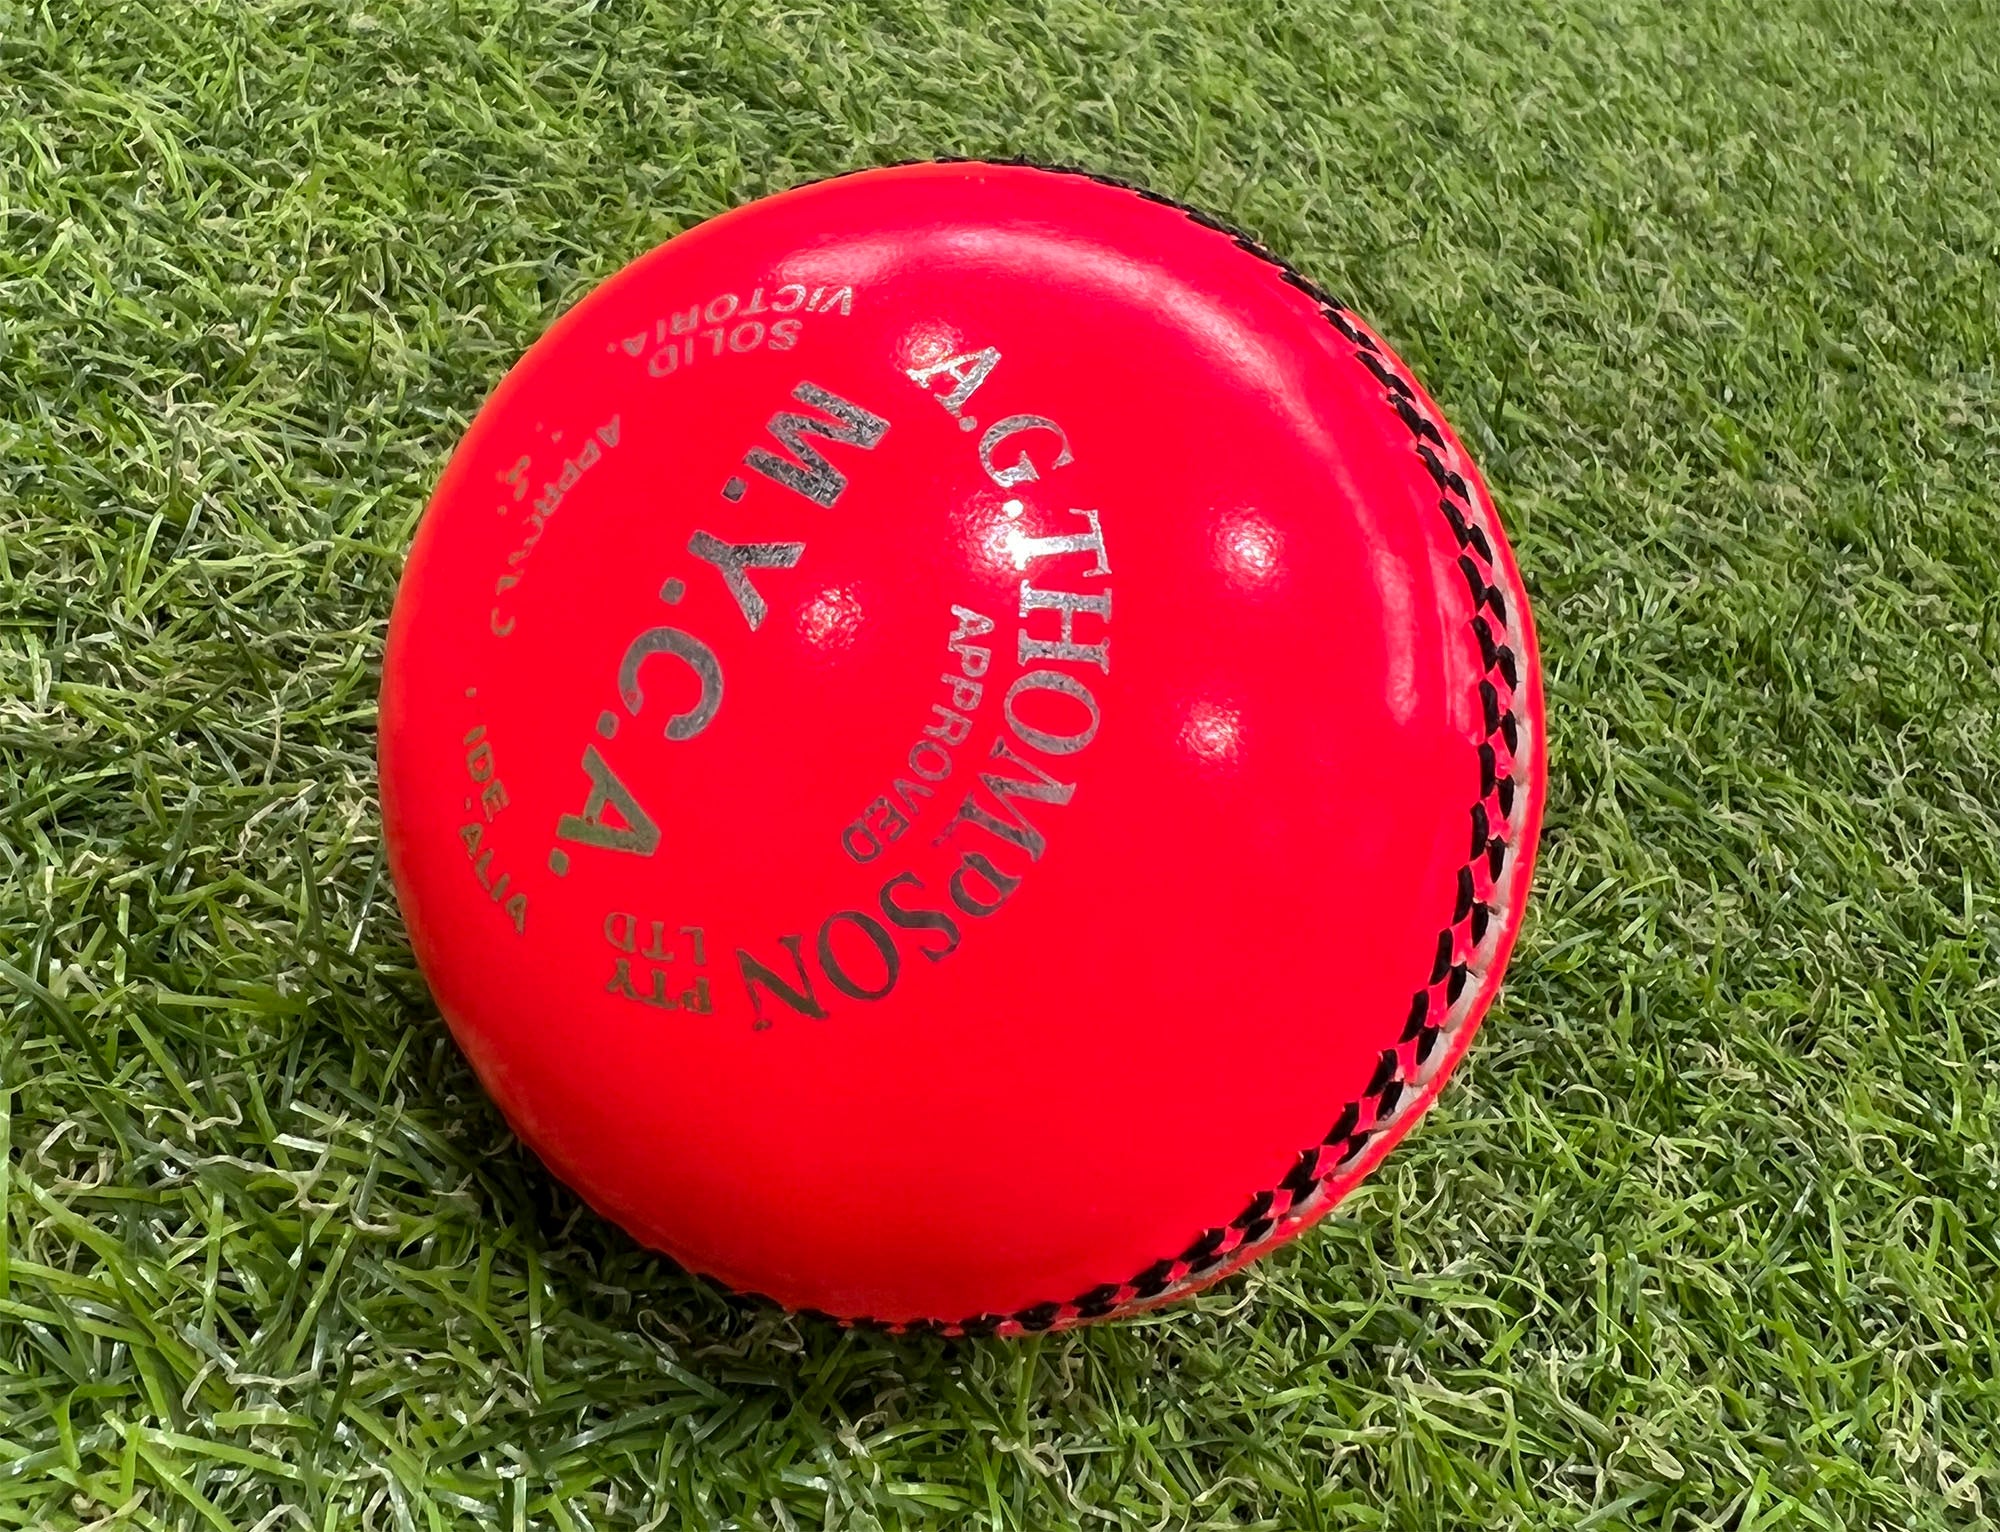 Kookaburra Mid Year Cricket Association Match Balls